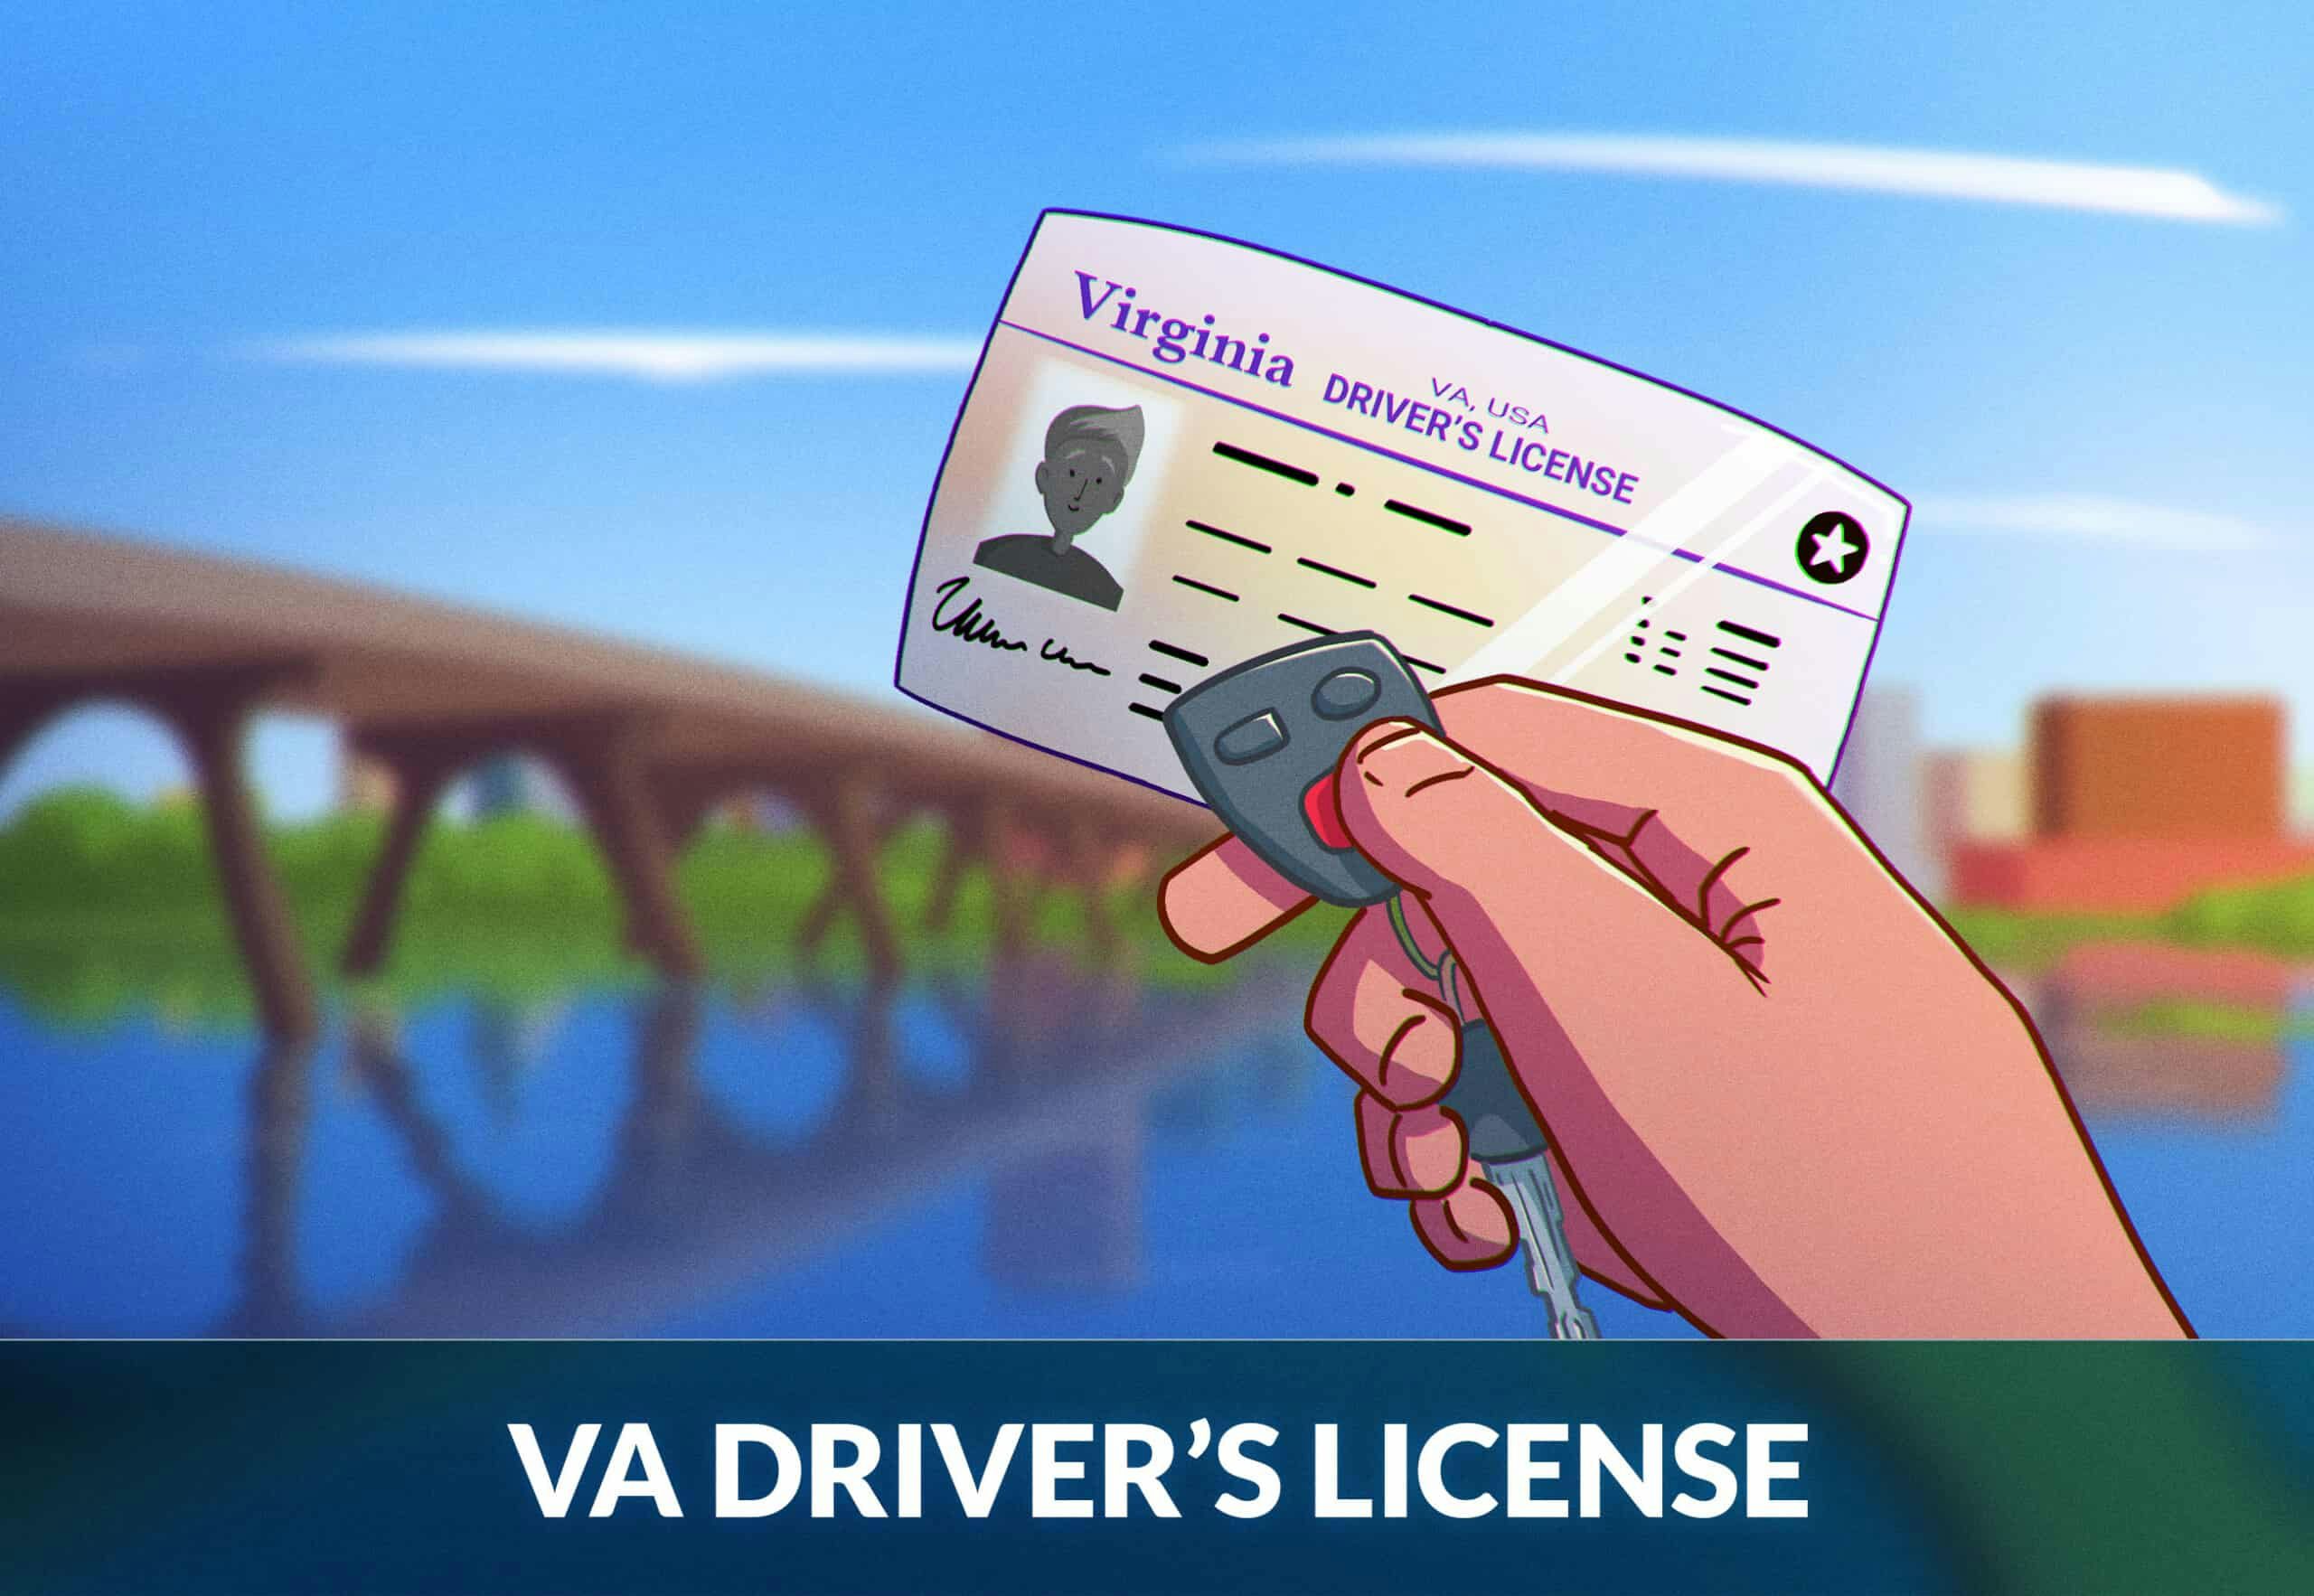 Virginia driver's license